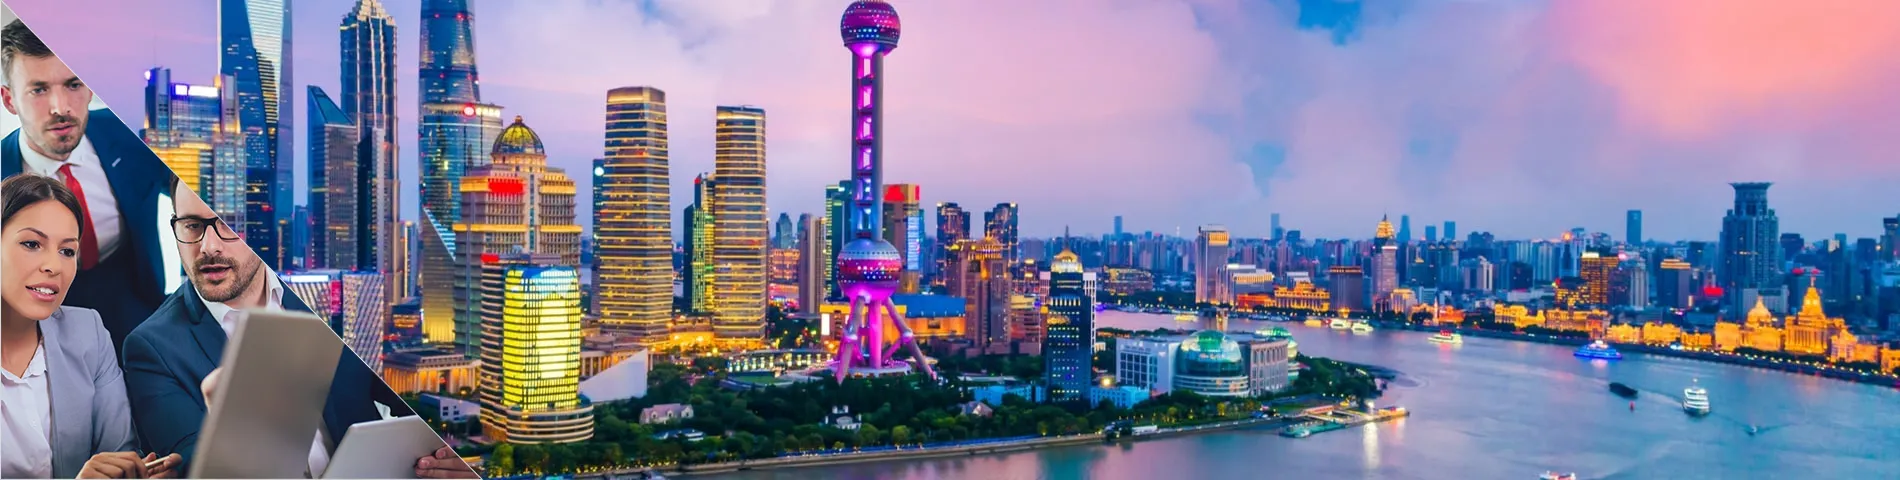 Šanghaj - Štandard a biznis - kombinovaná skupina